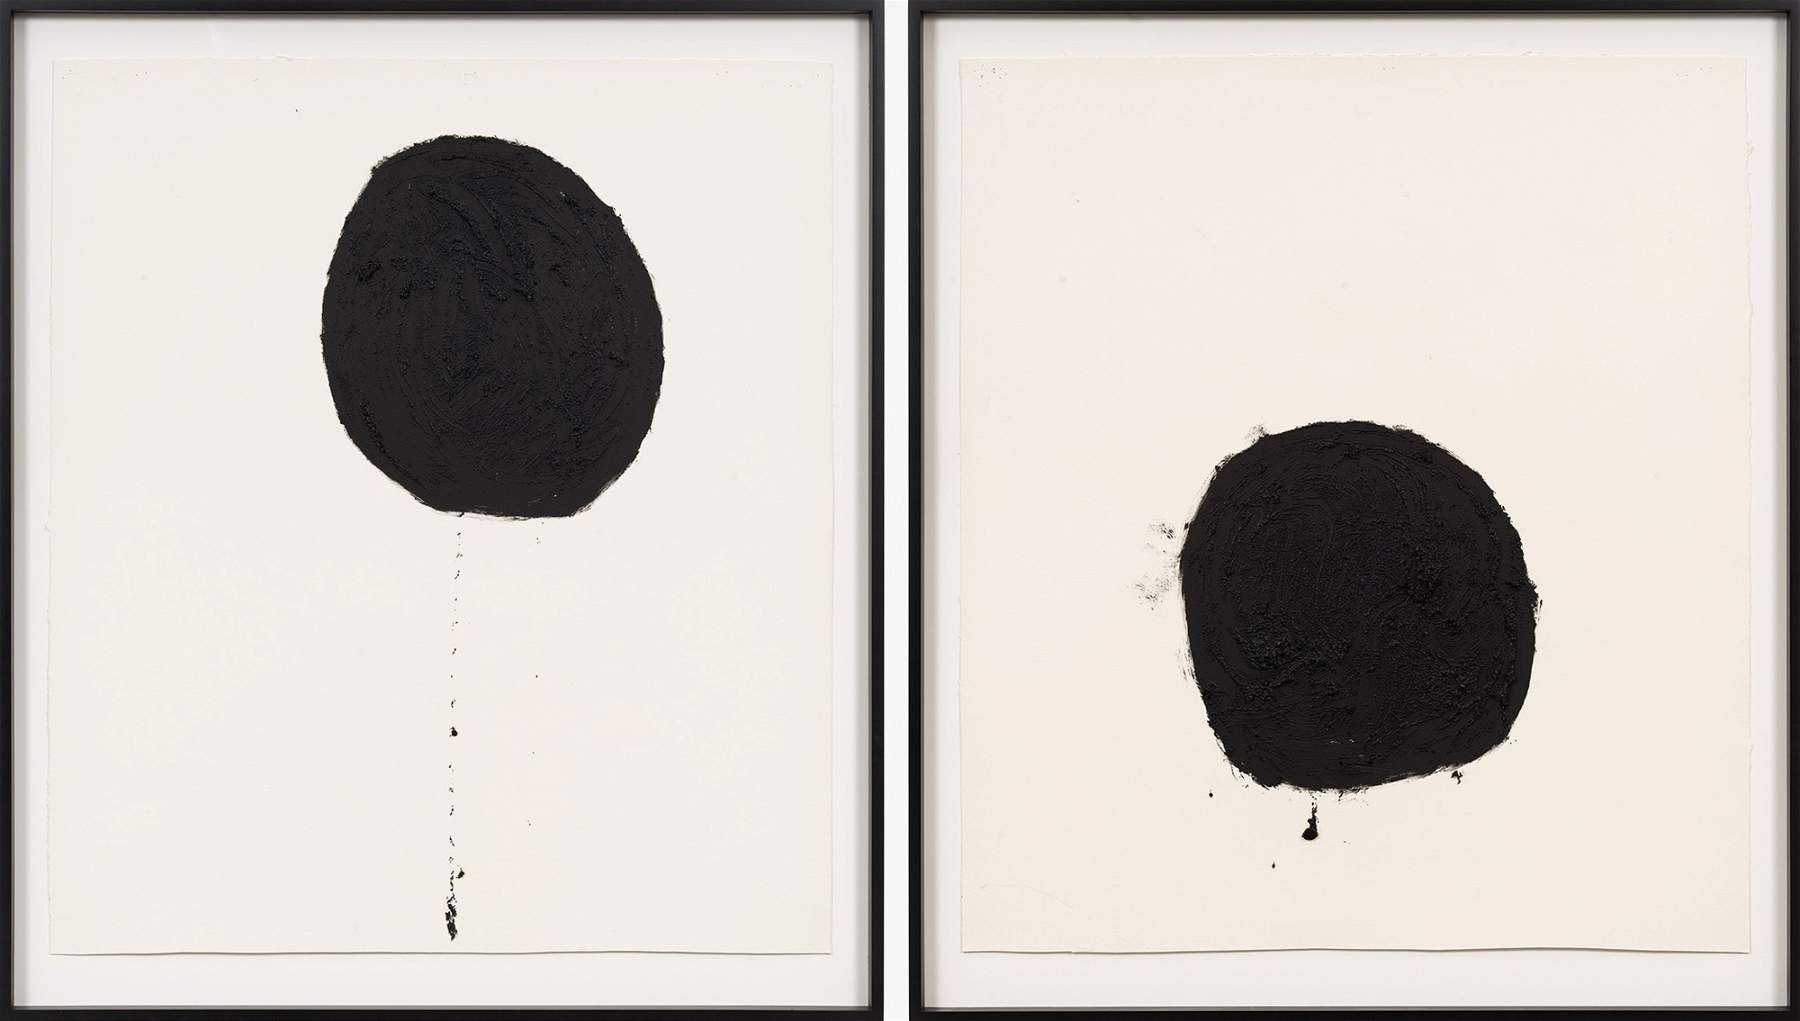 Milan, 40 œuvres de Richard Serra exposées à la Cardi Gallery